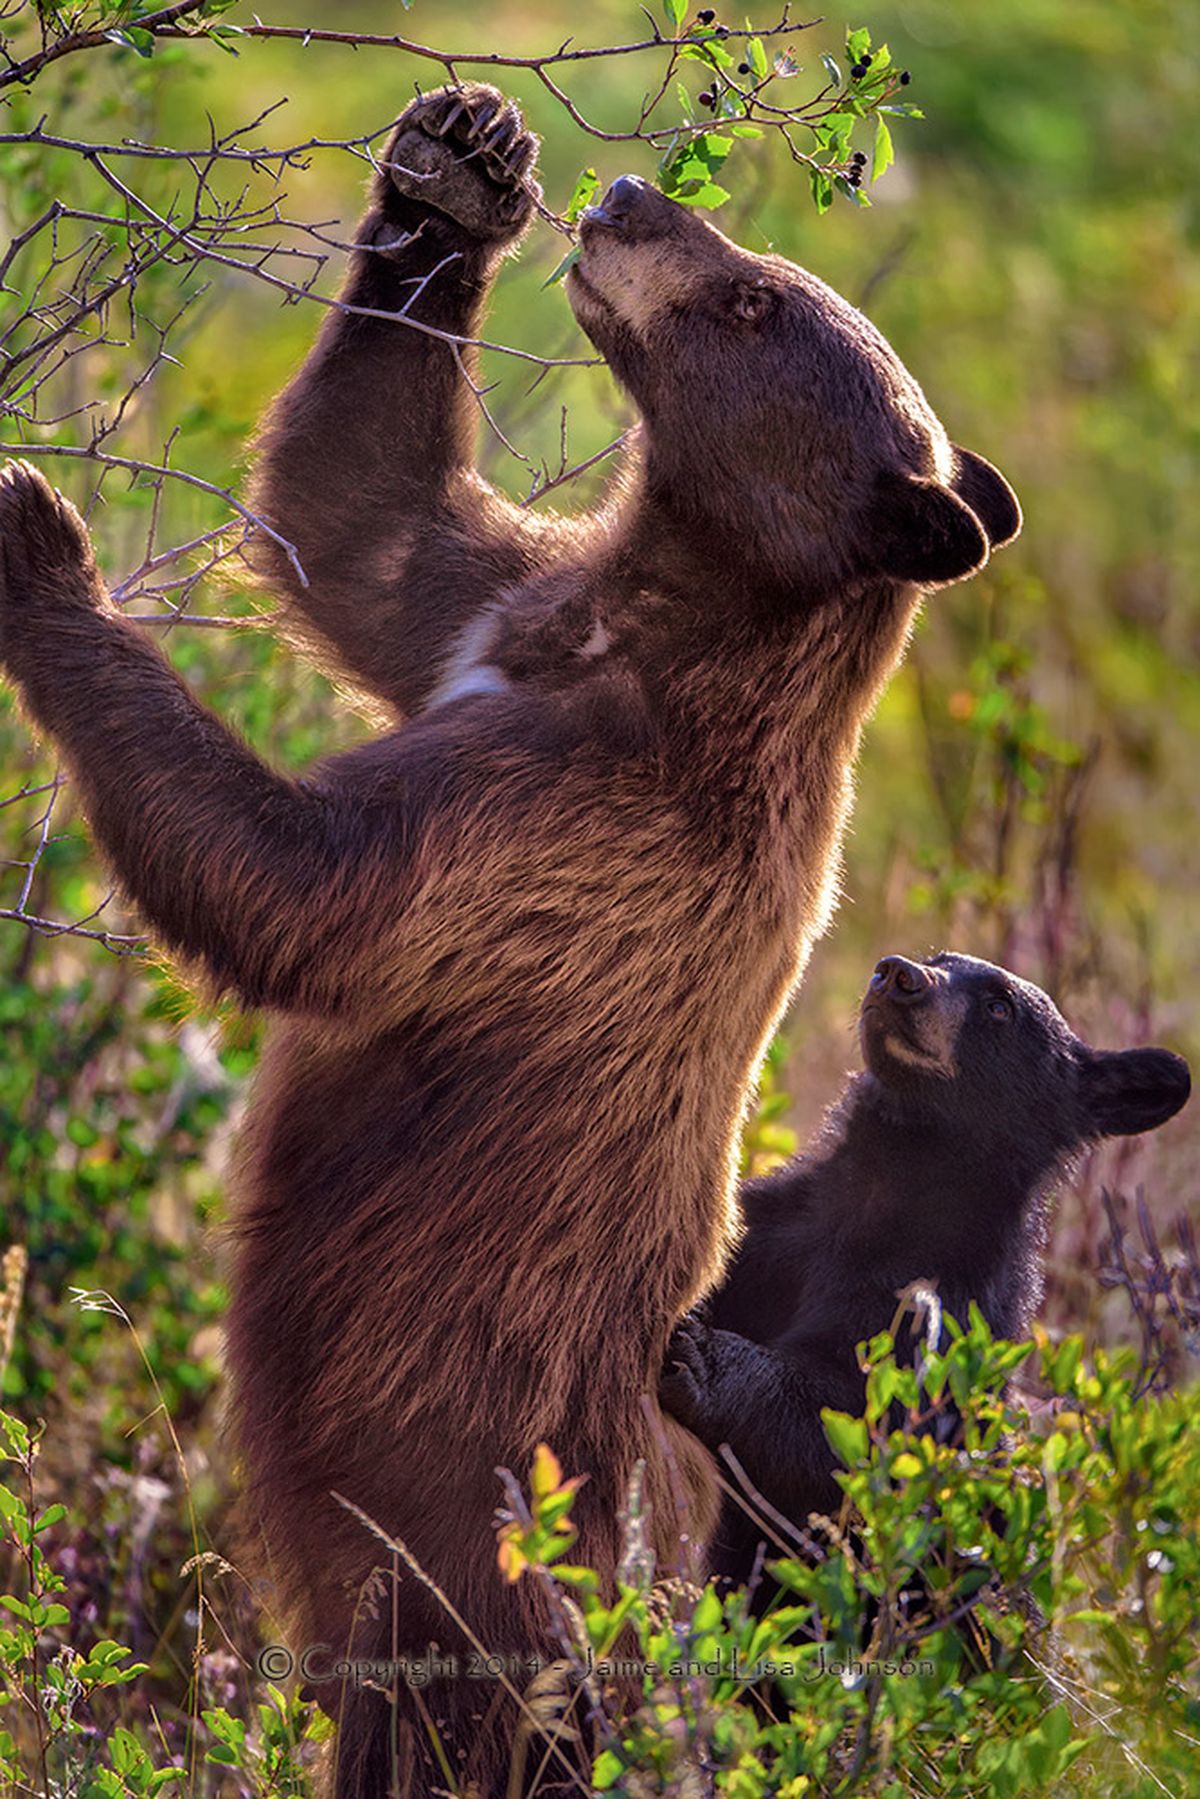 A black bear cub in Montana watches its mother eat chokecherries. (Jaime Johnson)